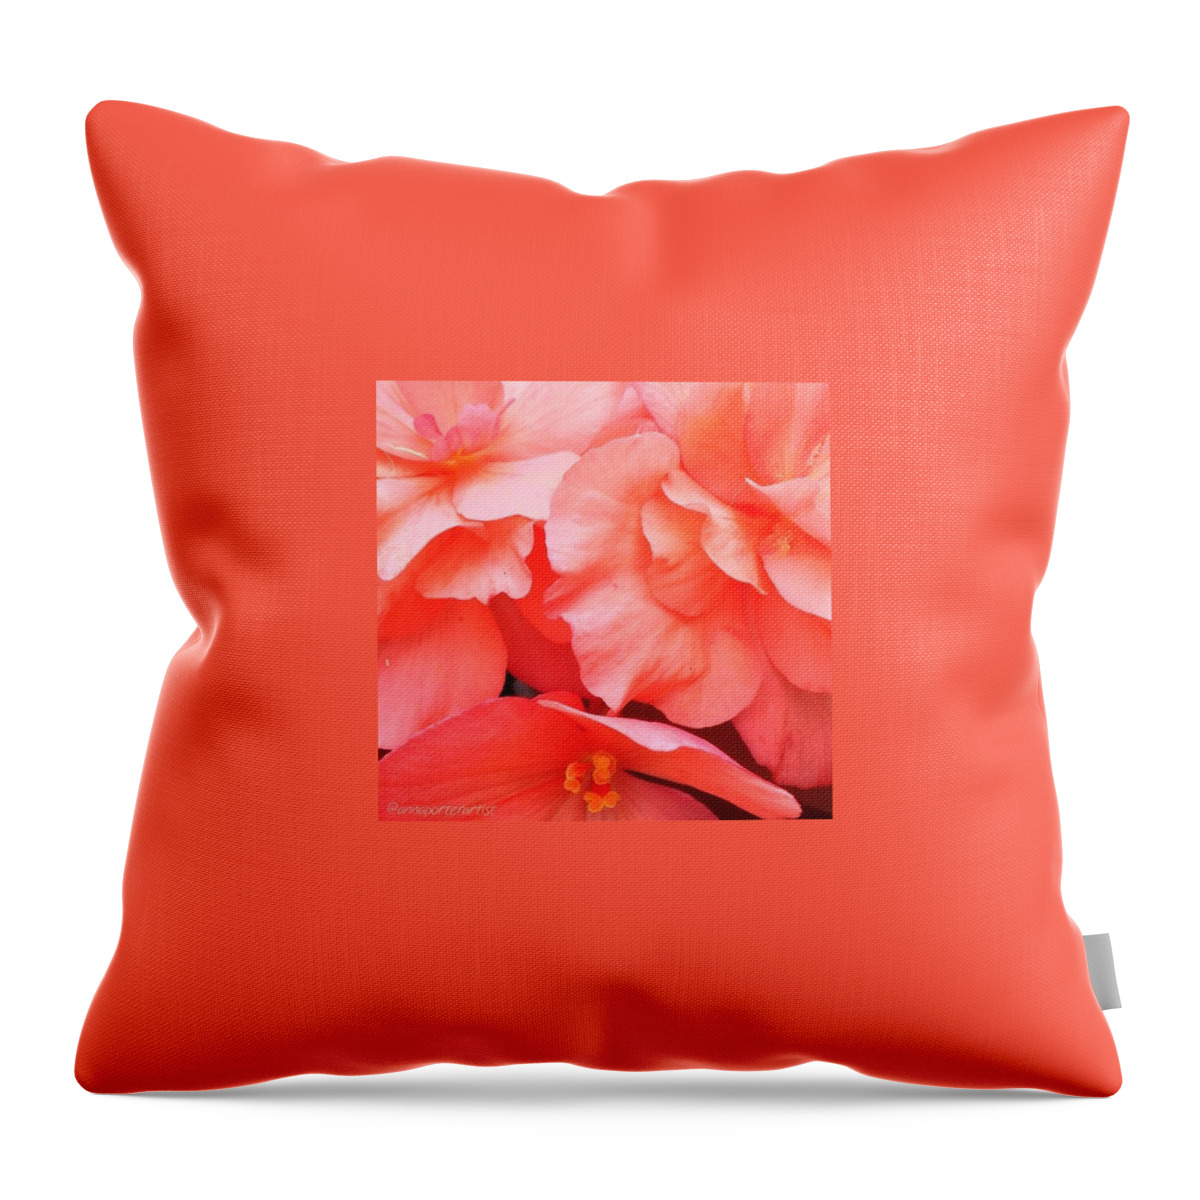 Annasgardens Throw Pillow featuring the photograph Orange Julius Begonias by Anna Porter